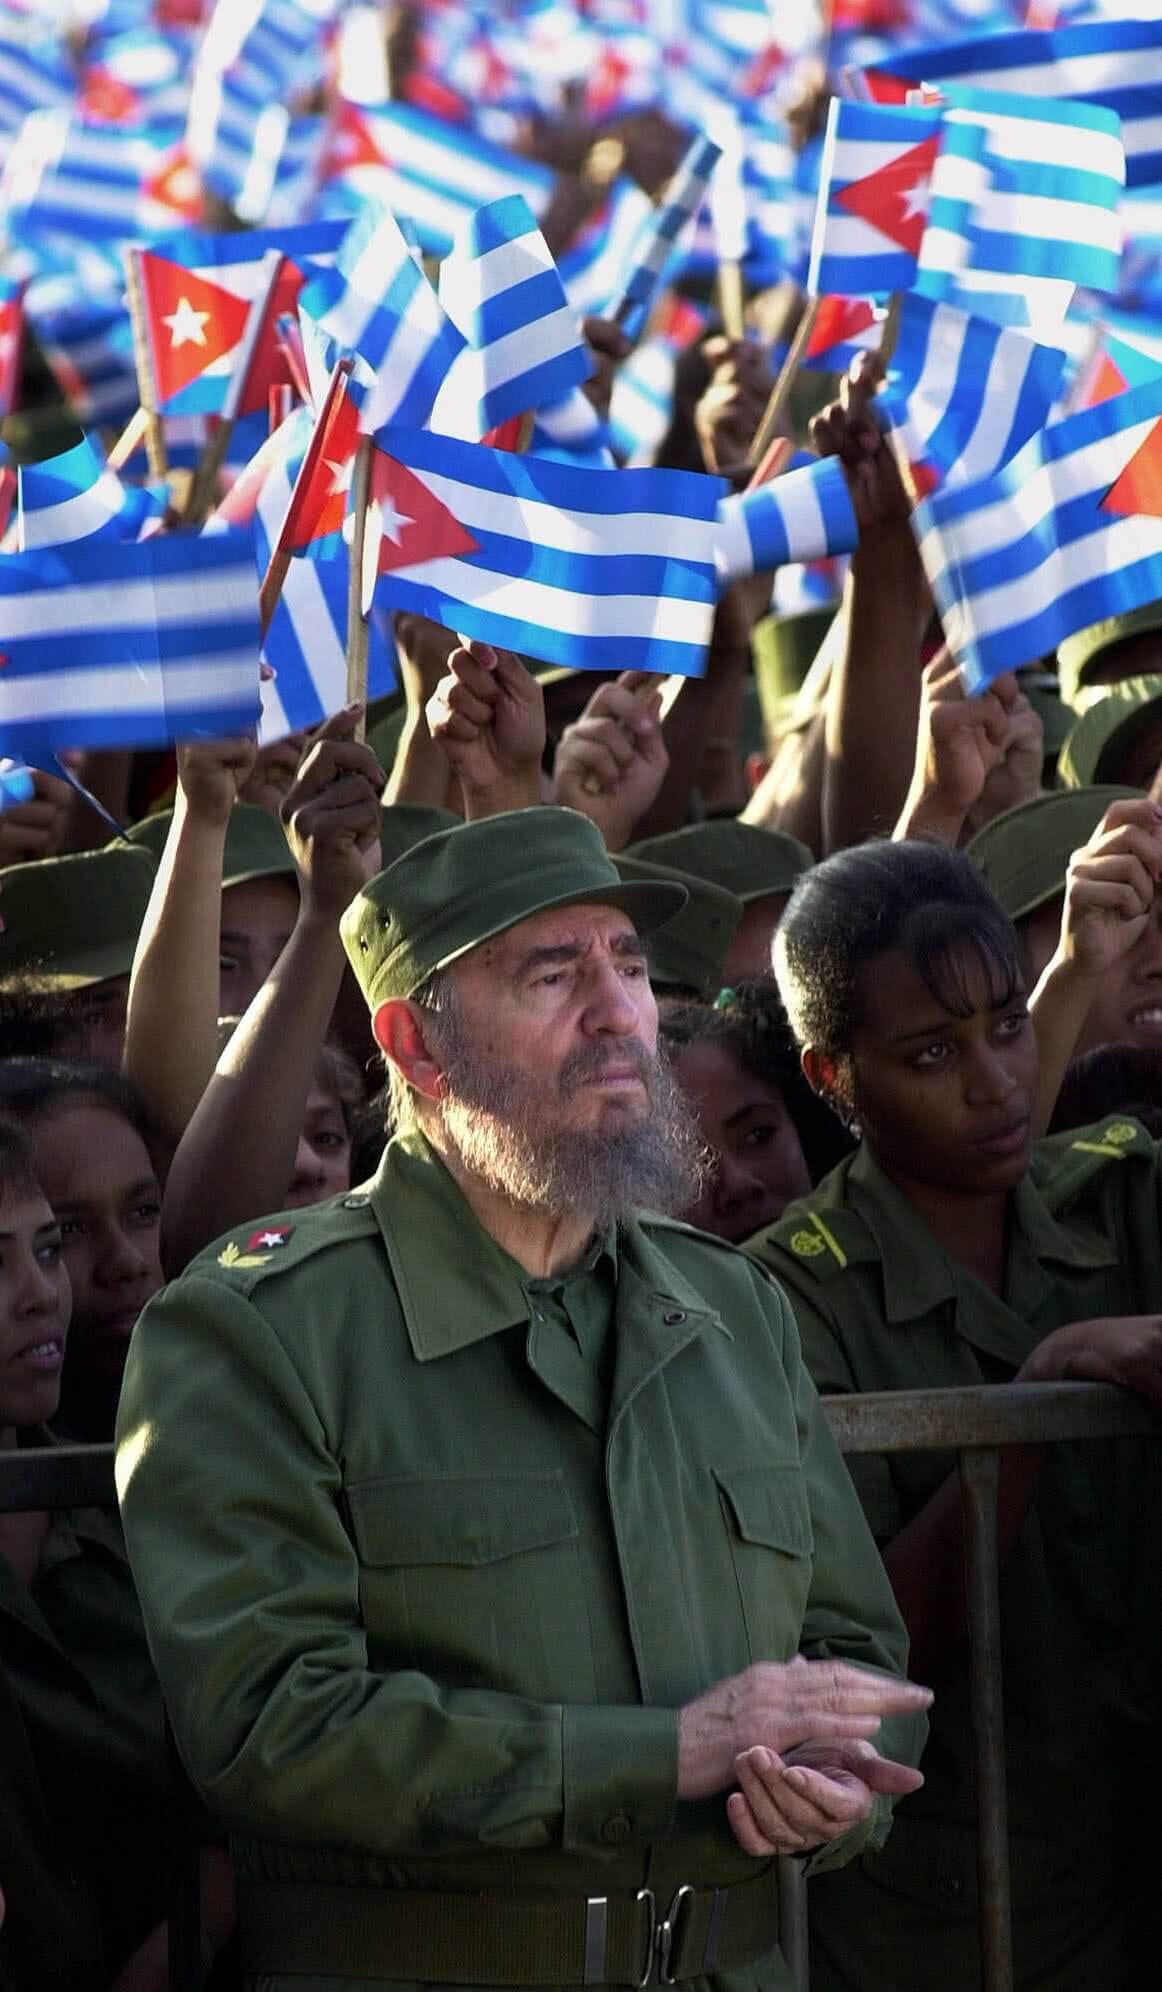 Image of Fidel Castro